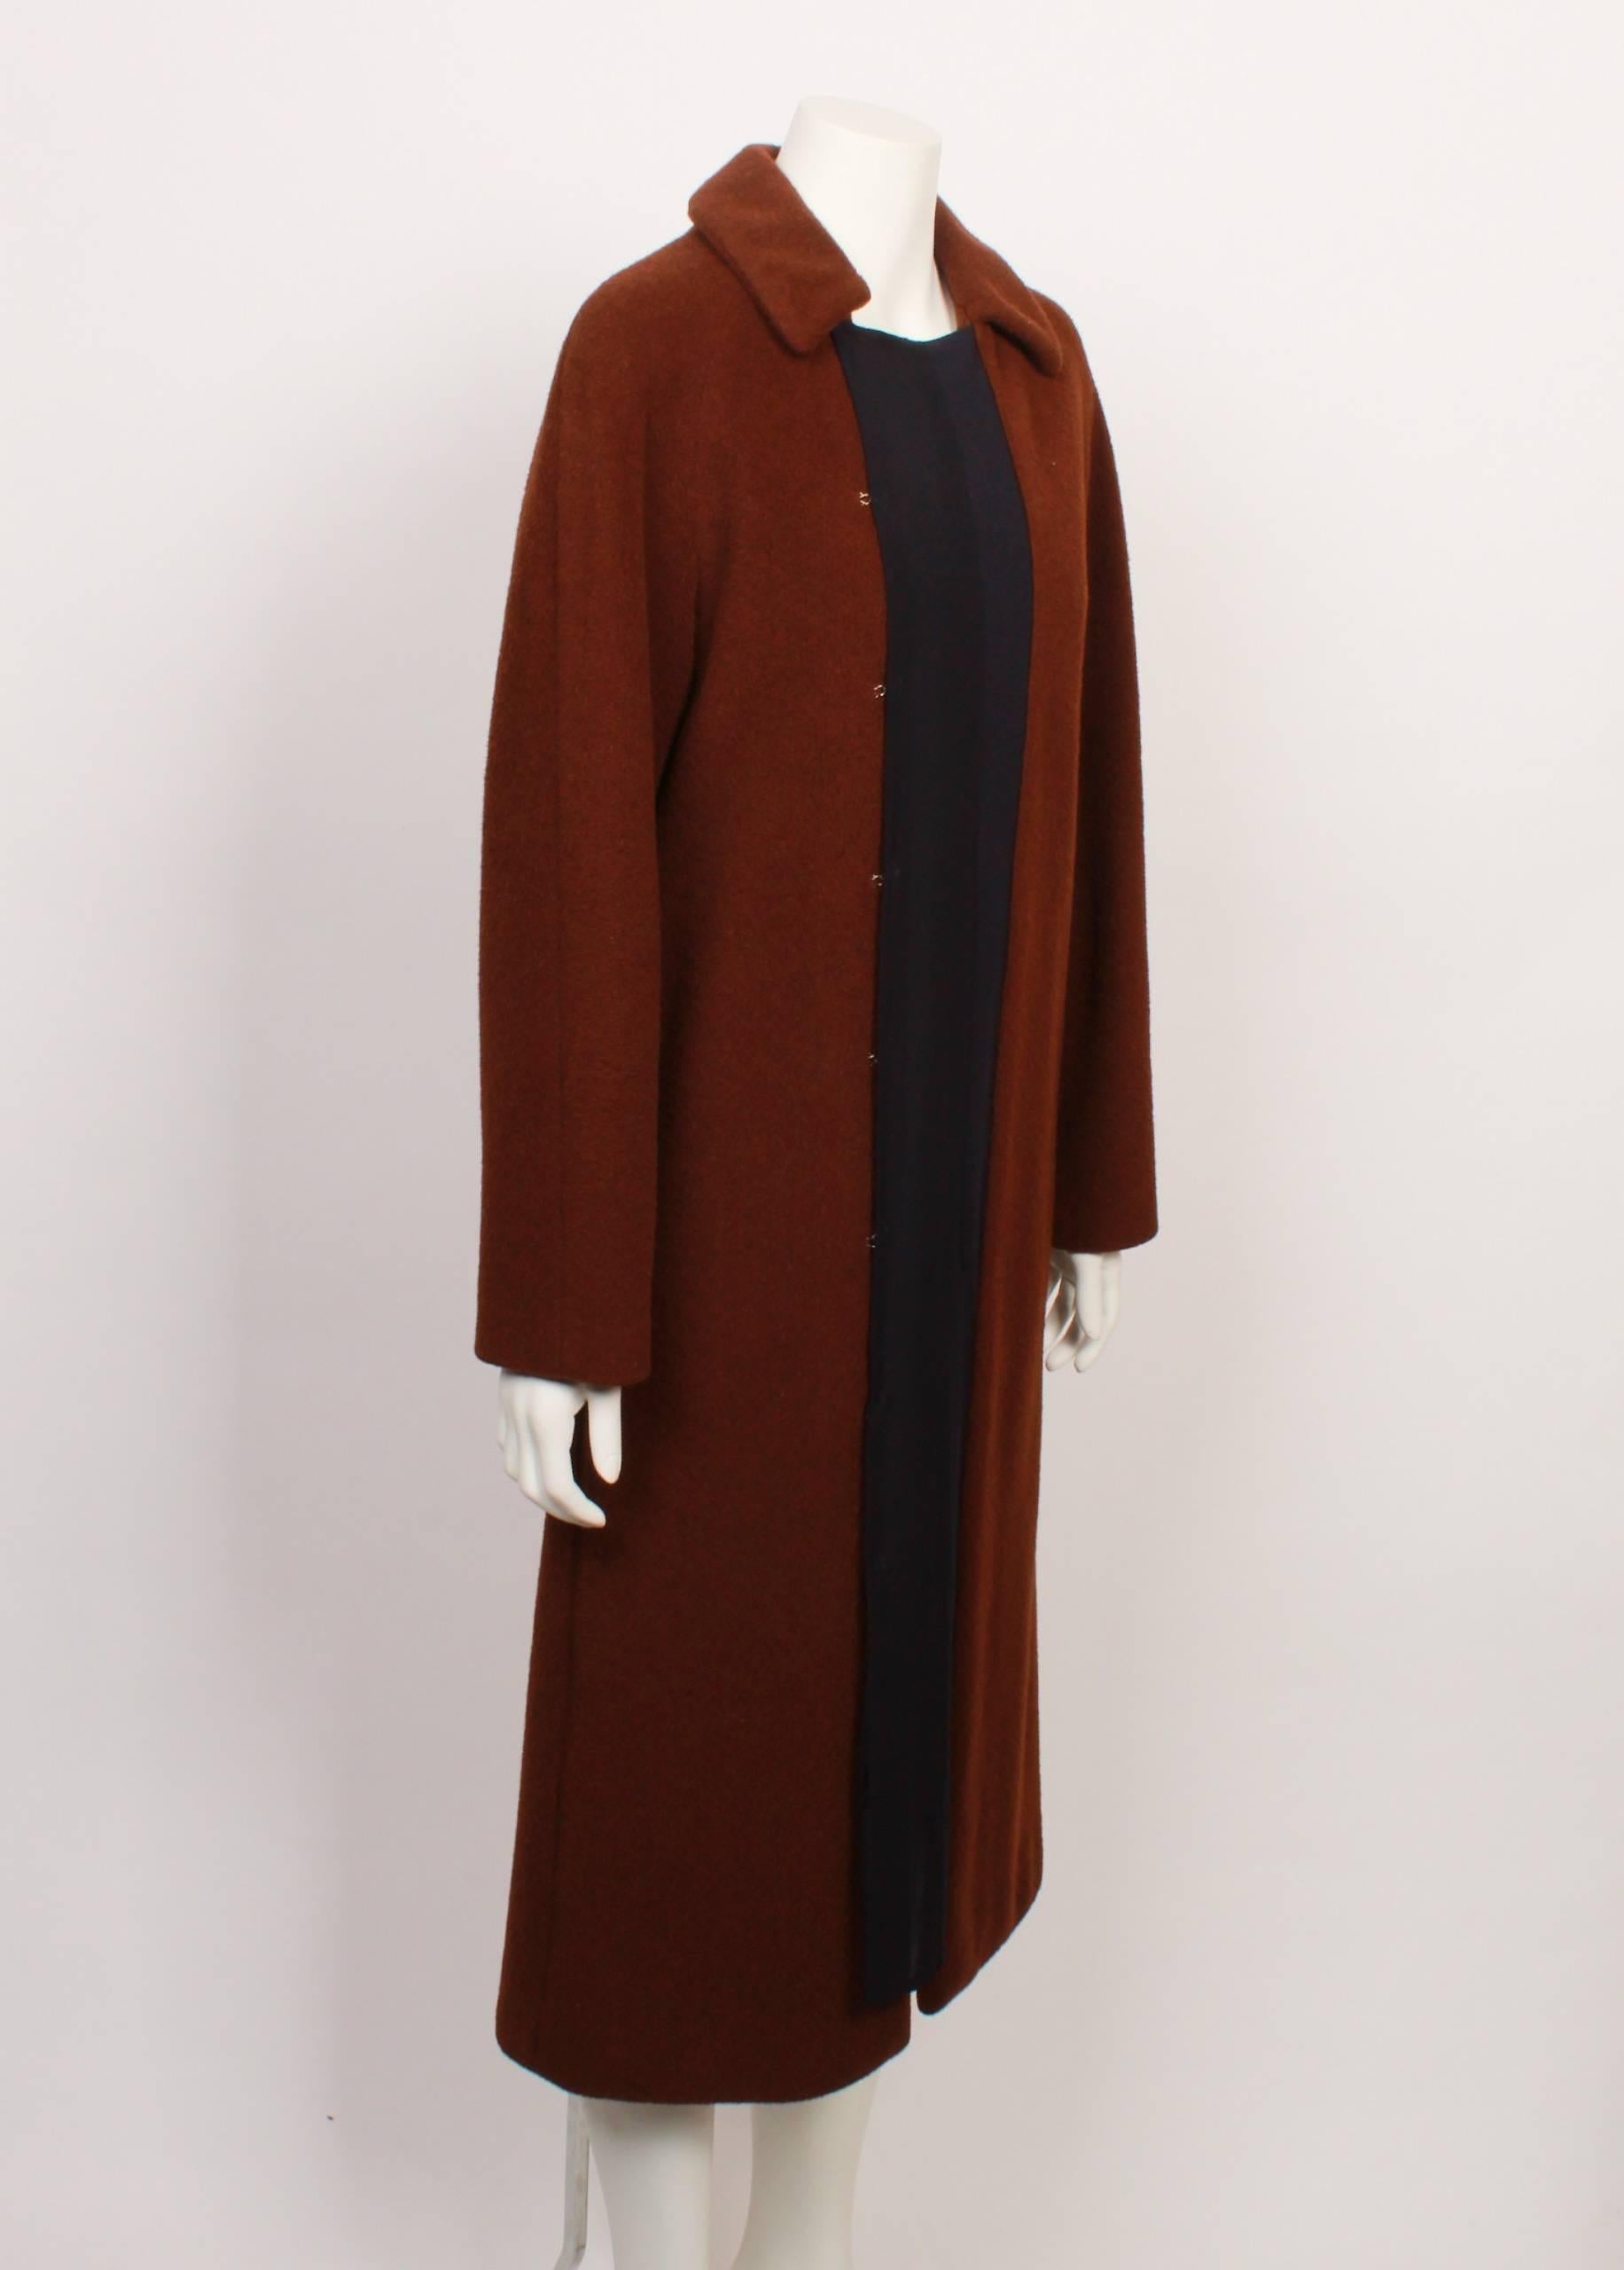 Brown Wool Winter Coat with sheer black pane down front. 